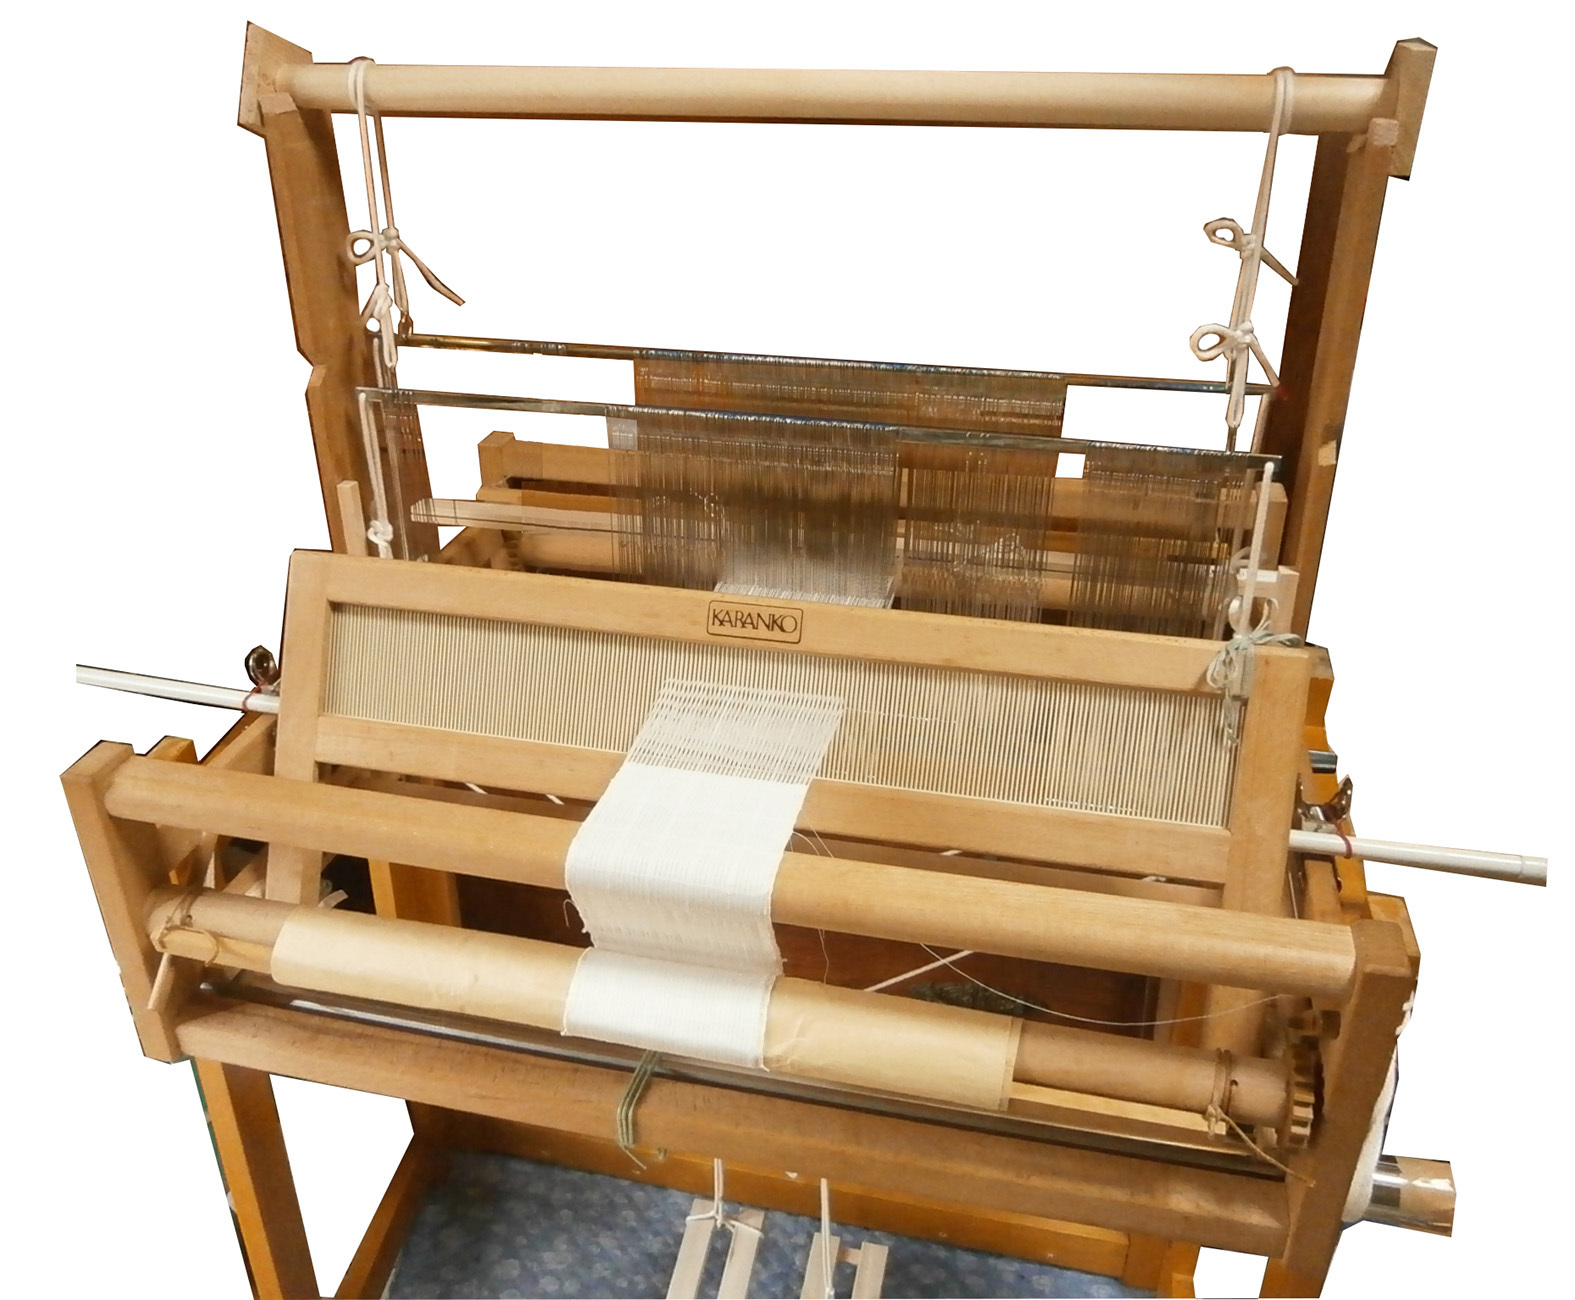 KARANKO 卓上型 手織り機 - その他